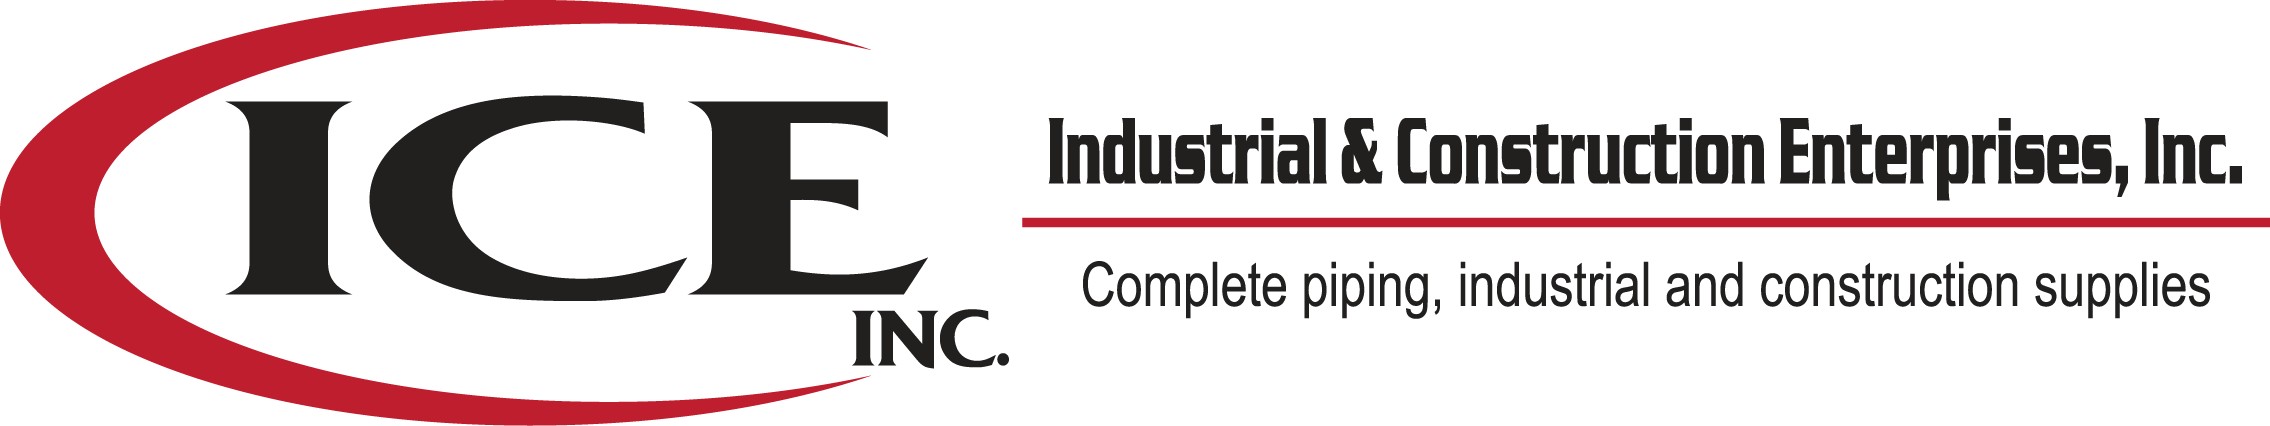 Industrial Construction Enterprises Inc Linkedin